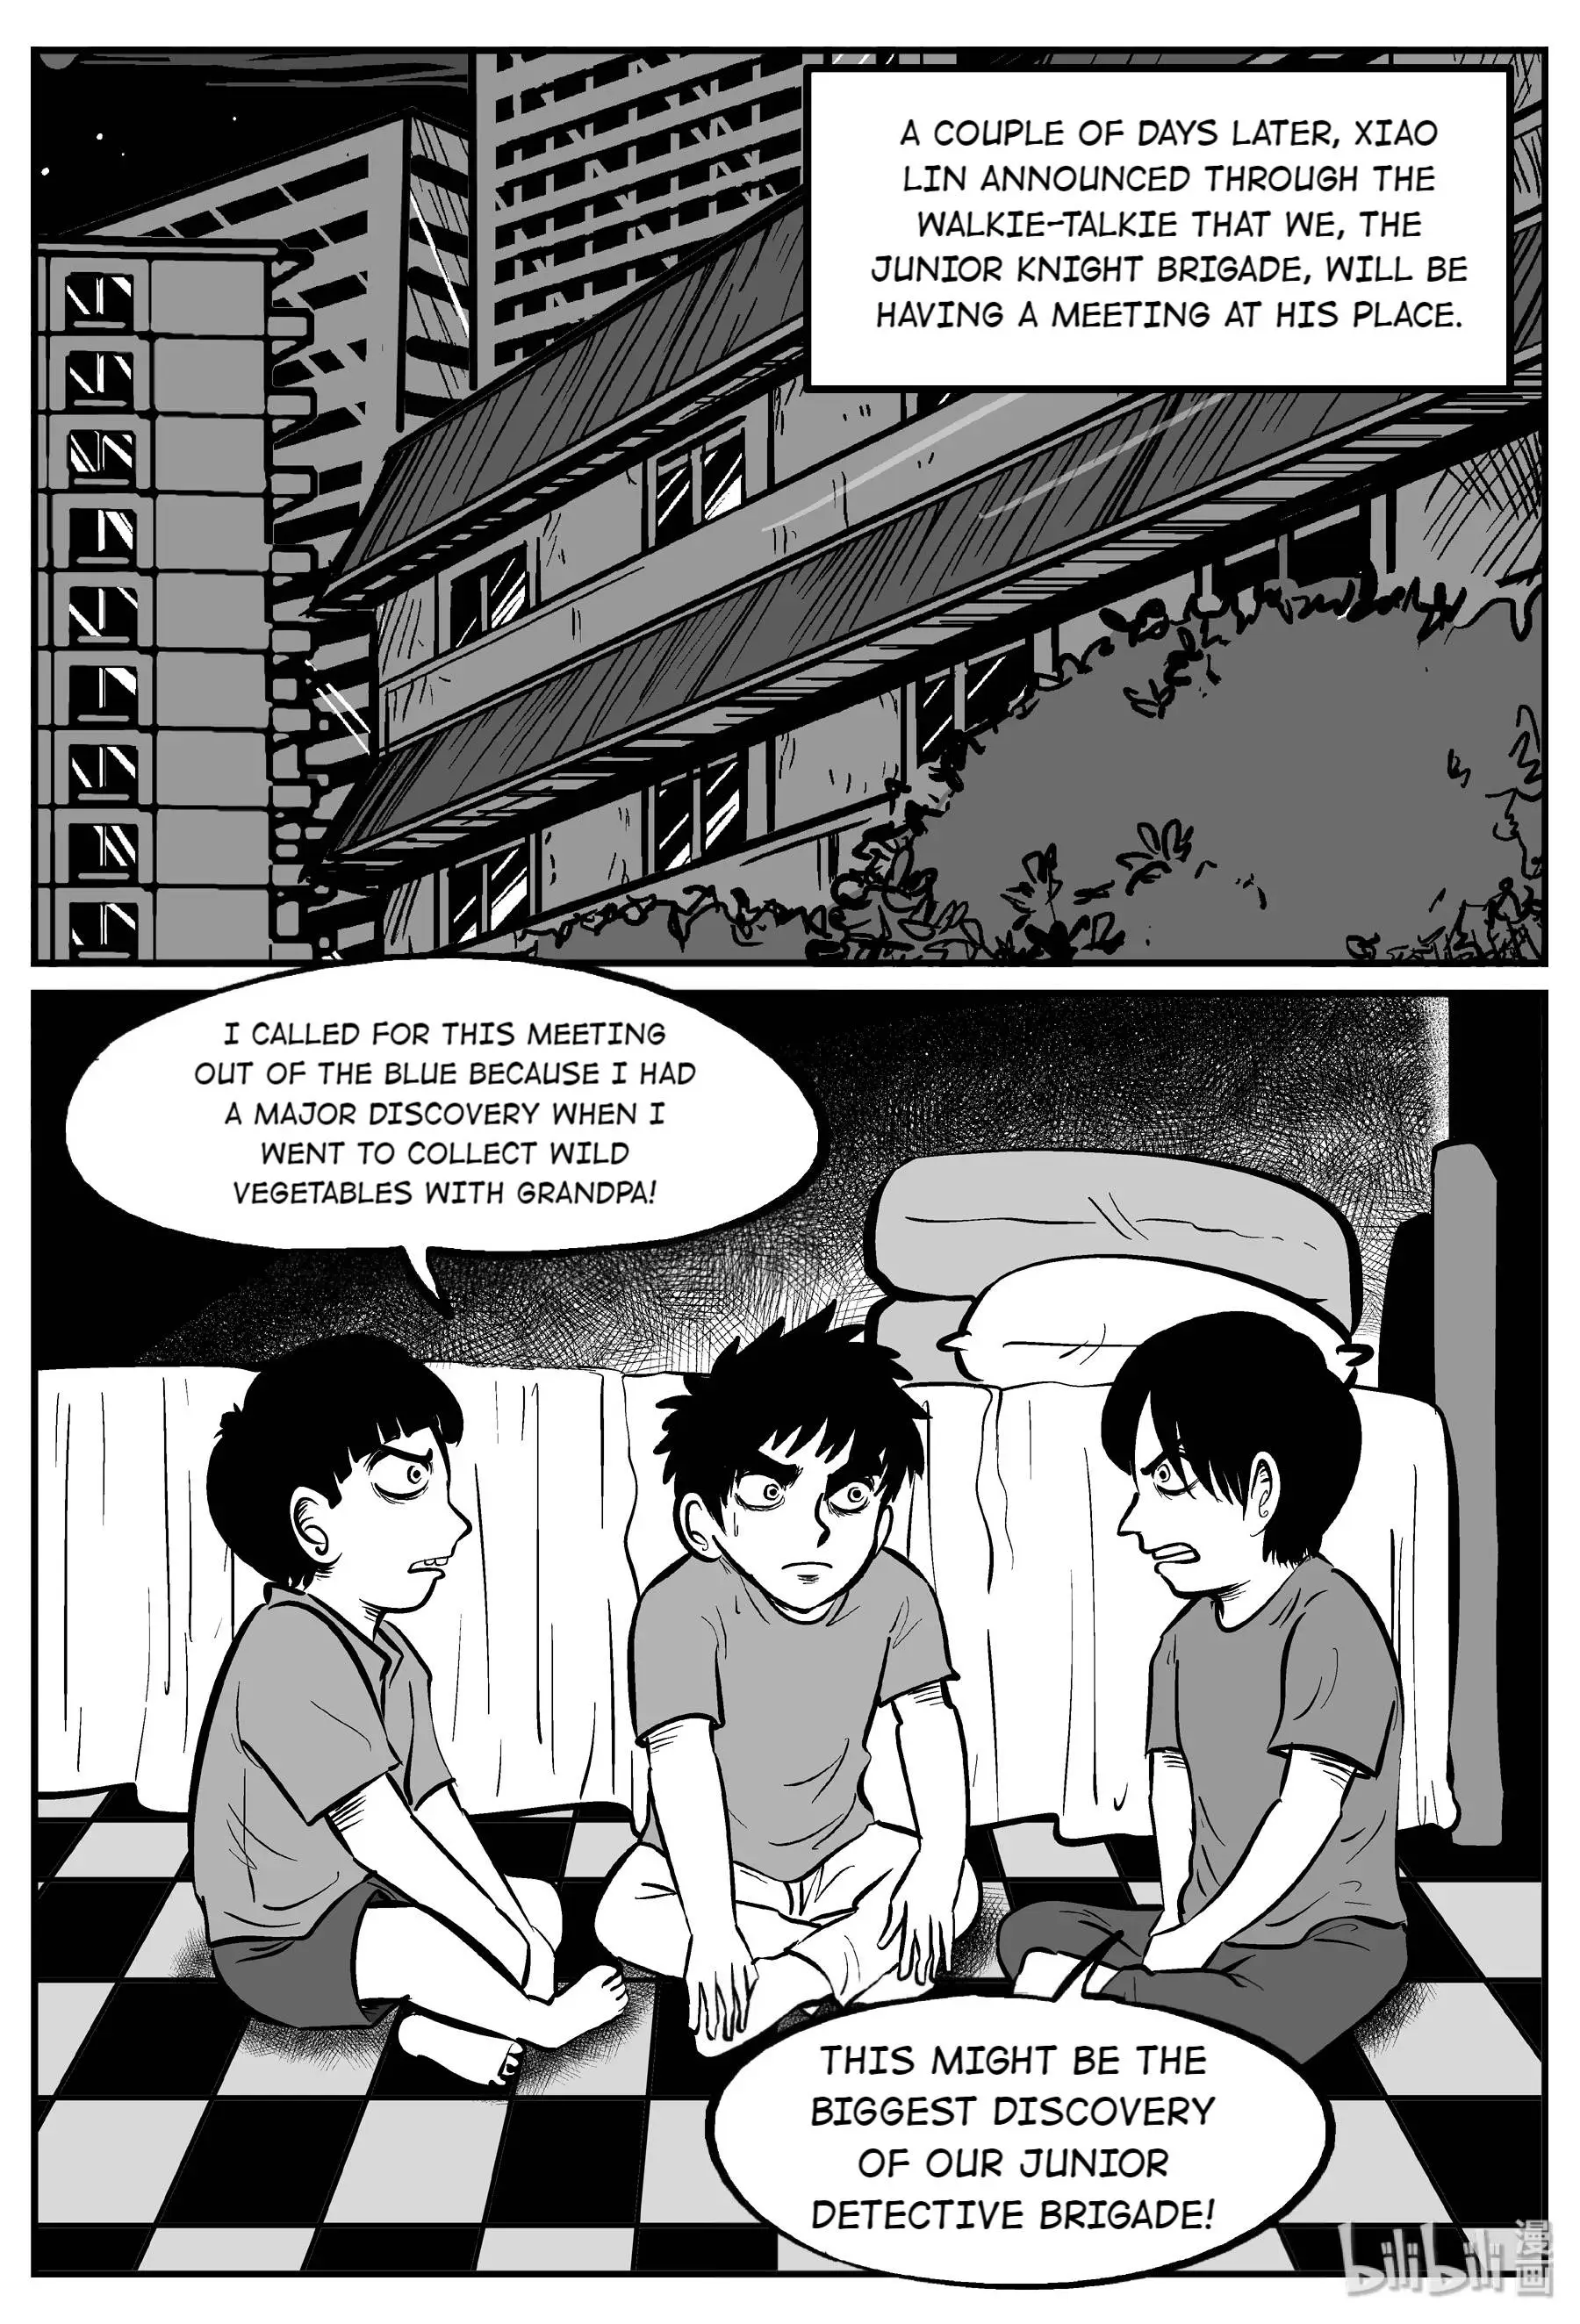 Strange Tales Of Xiao Zhi - 31 page 10-5f66aadb